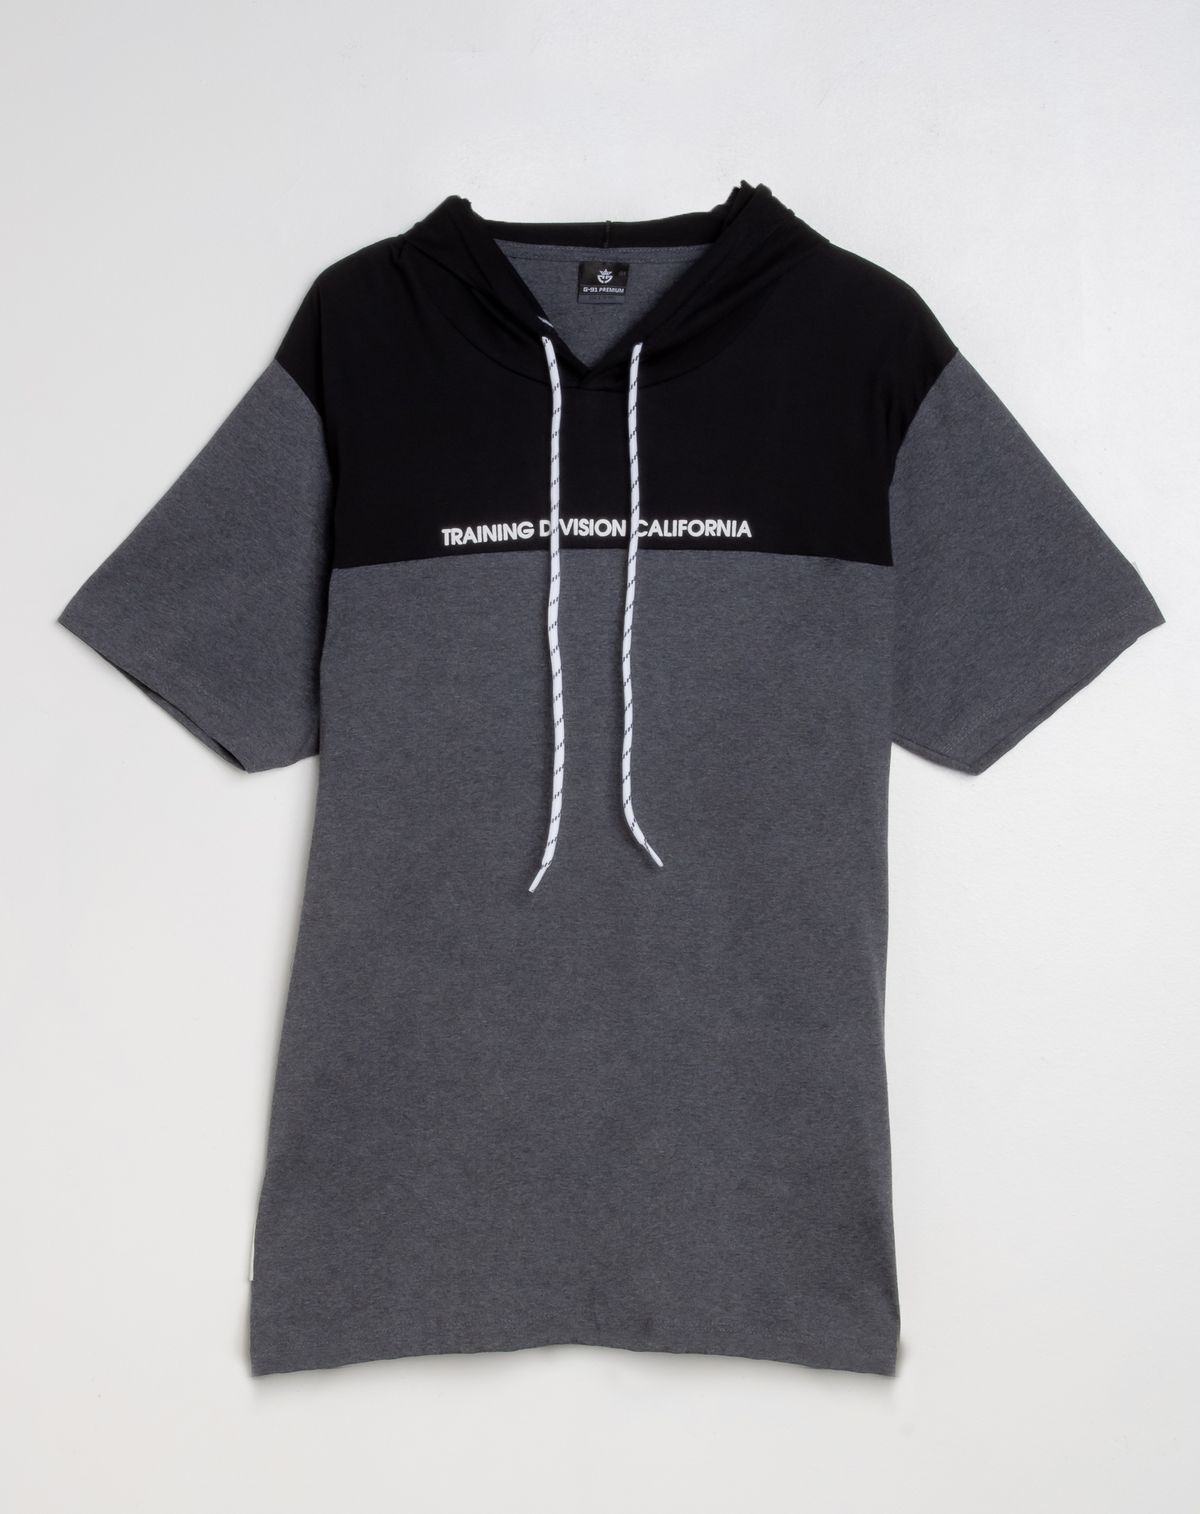 625683001-camiseta-manga-curta-plus-masculina-capuz-recortes-mescla-g1-072